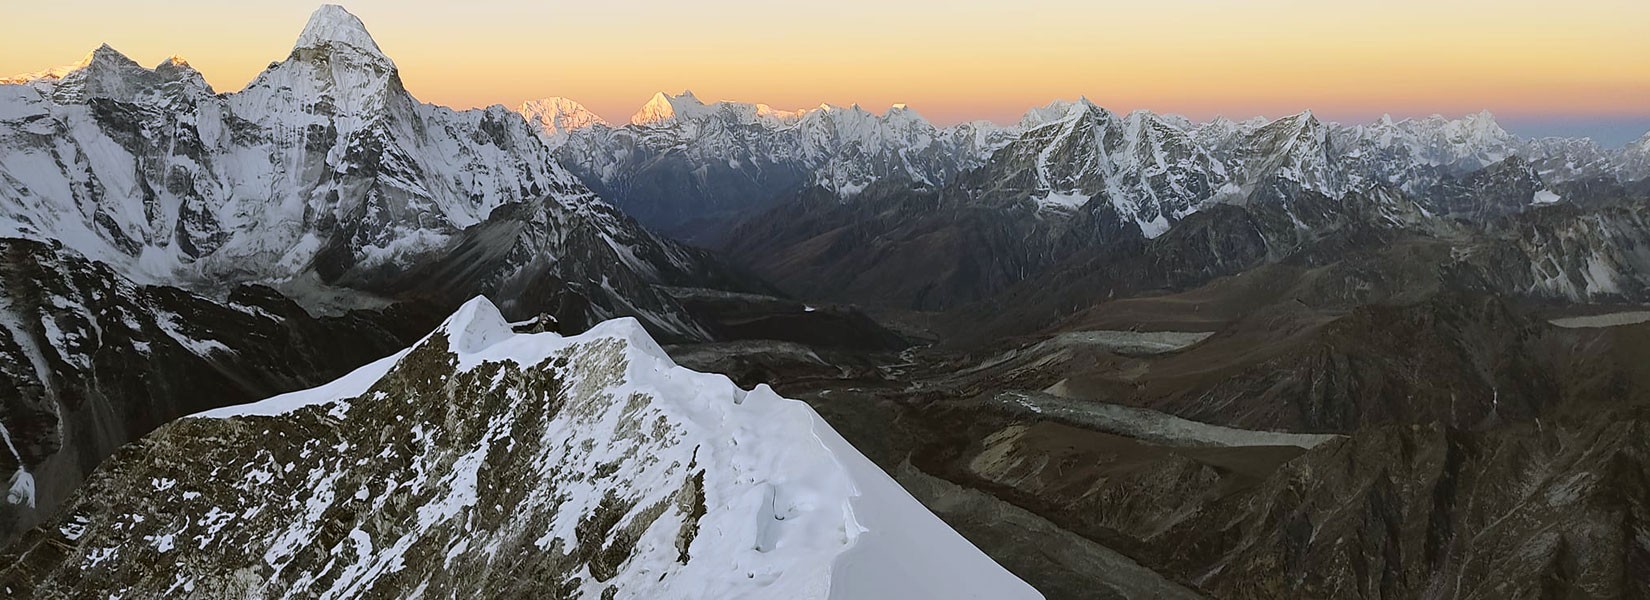 Everest Base Camp Trek with Island Peak Climbing